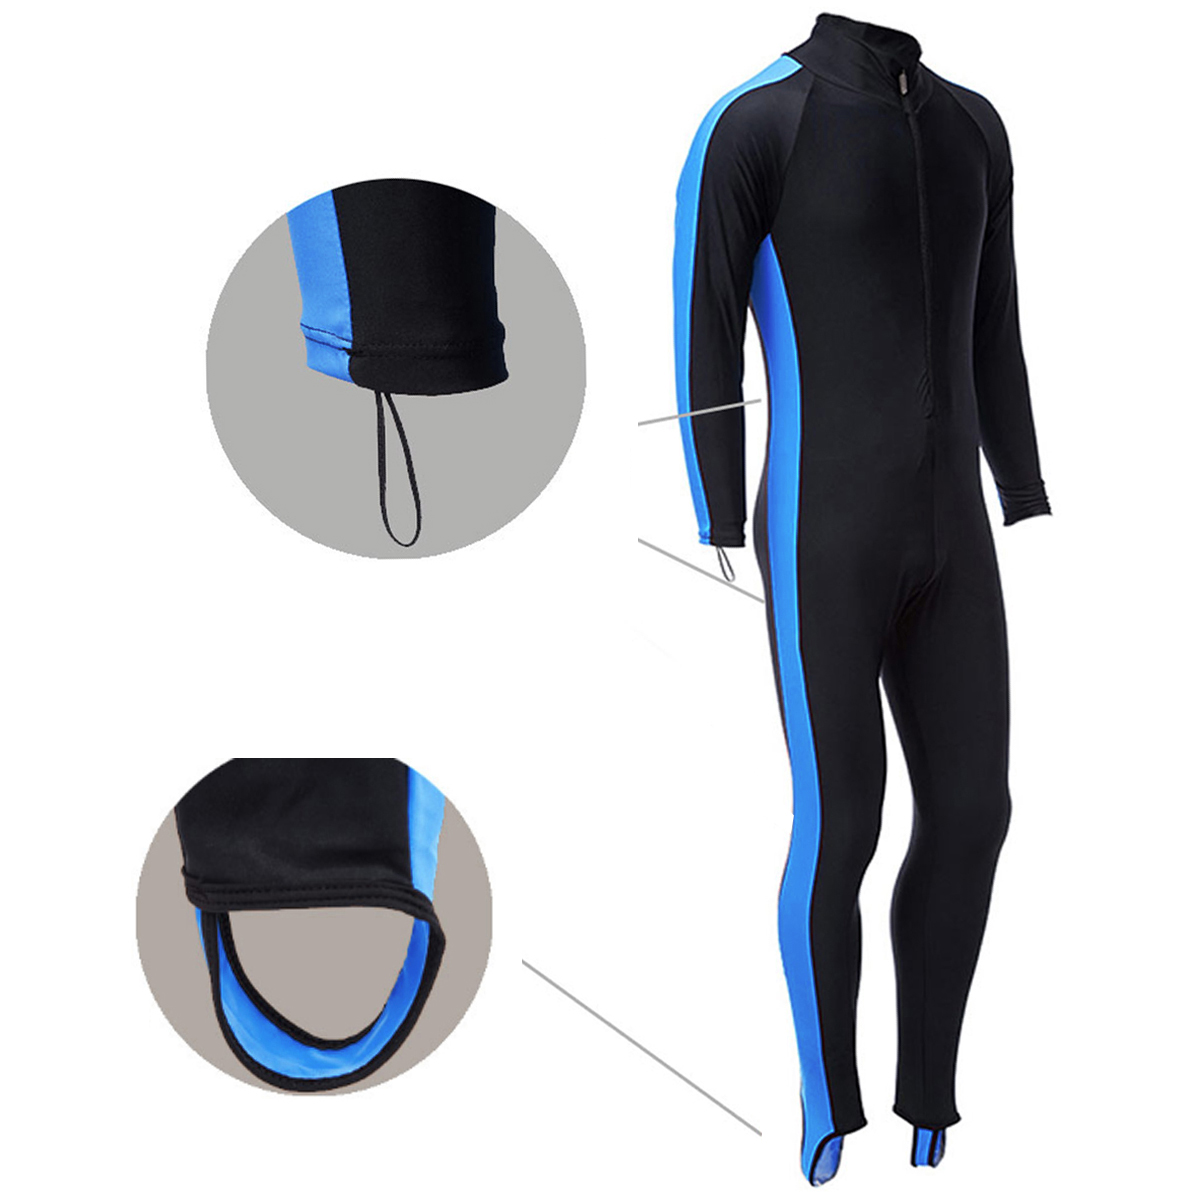 Unisex-Full-Body-Diving-Suit-Men-Women-Scuba-Diving-Wetsuit-Swimming-Surfing-UV-Protection-Snorkelin-1714664-5